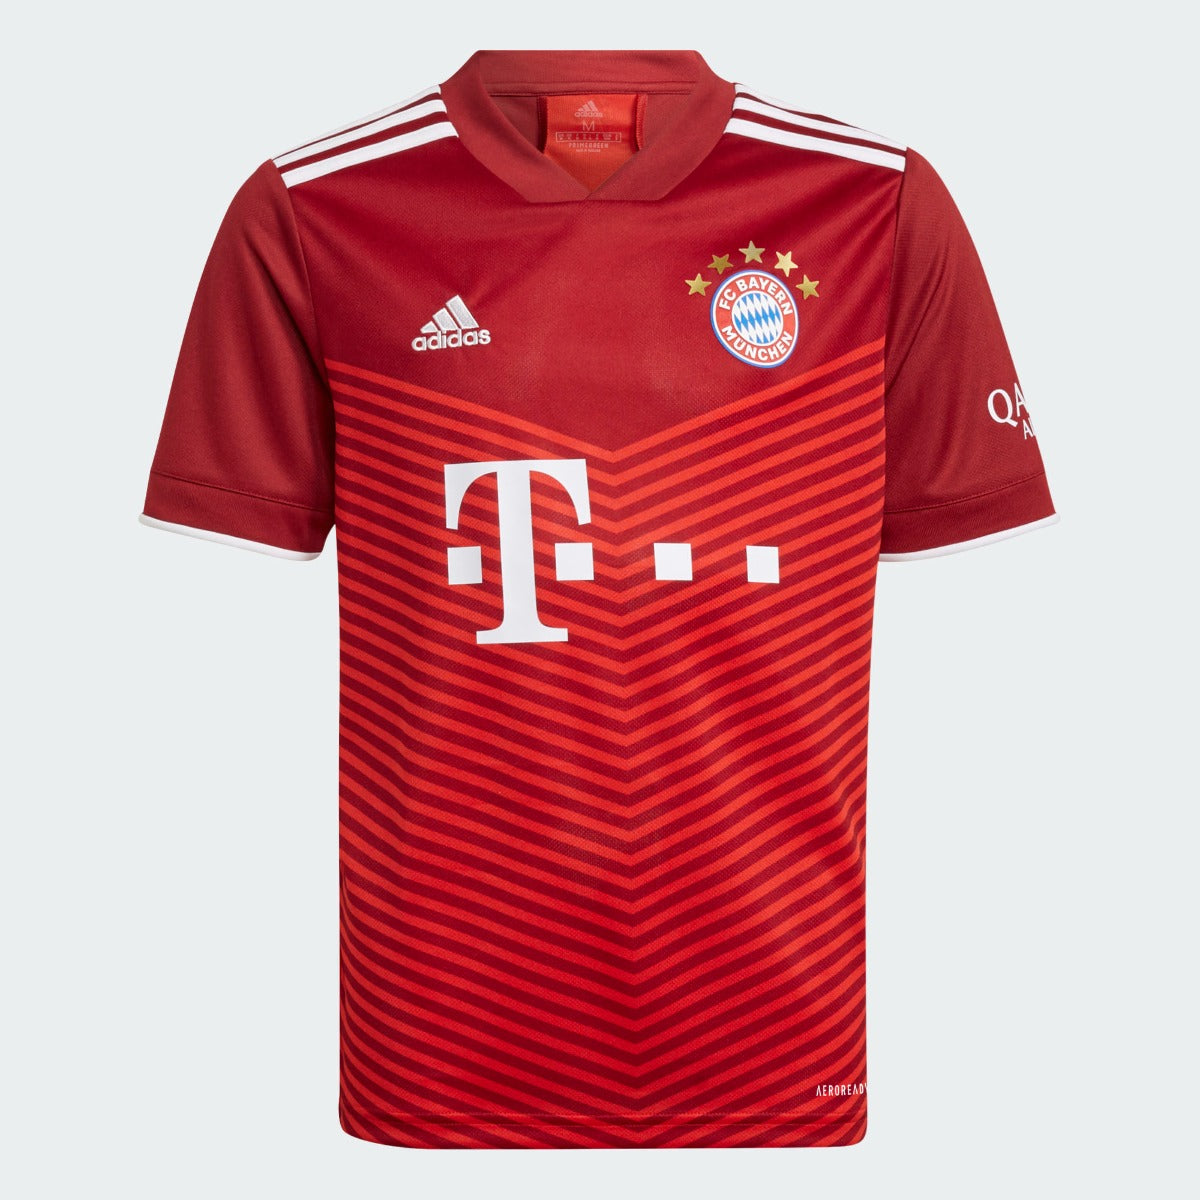 Adidas 2021-22 Bayern Munich Youth Home Jersey - True Red (Front)